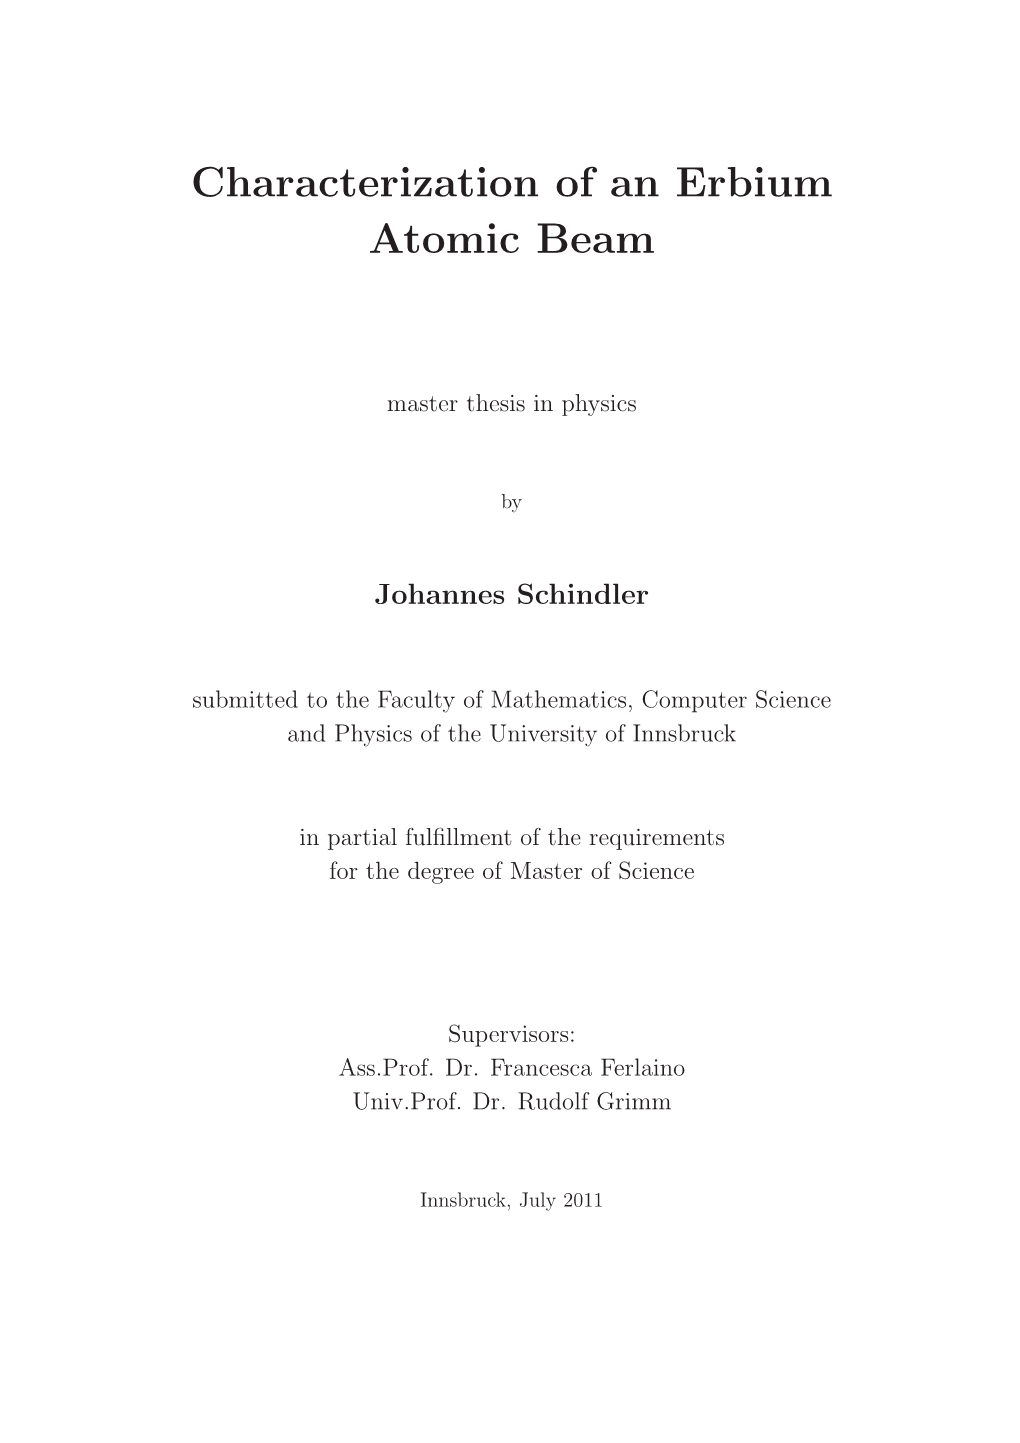 Characterization of an Erbium Atomic Beam